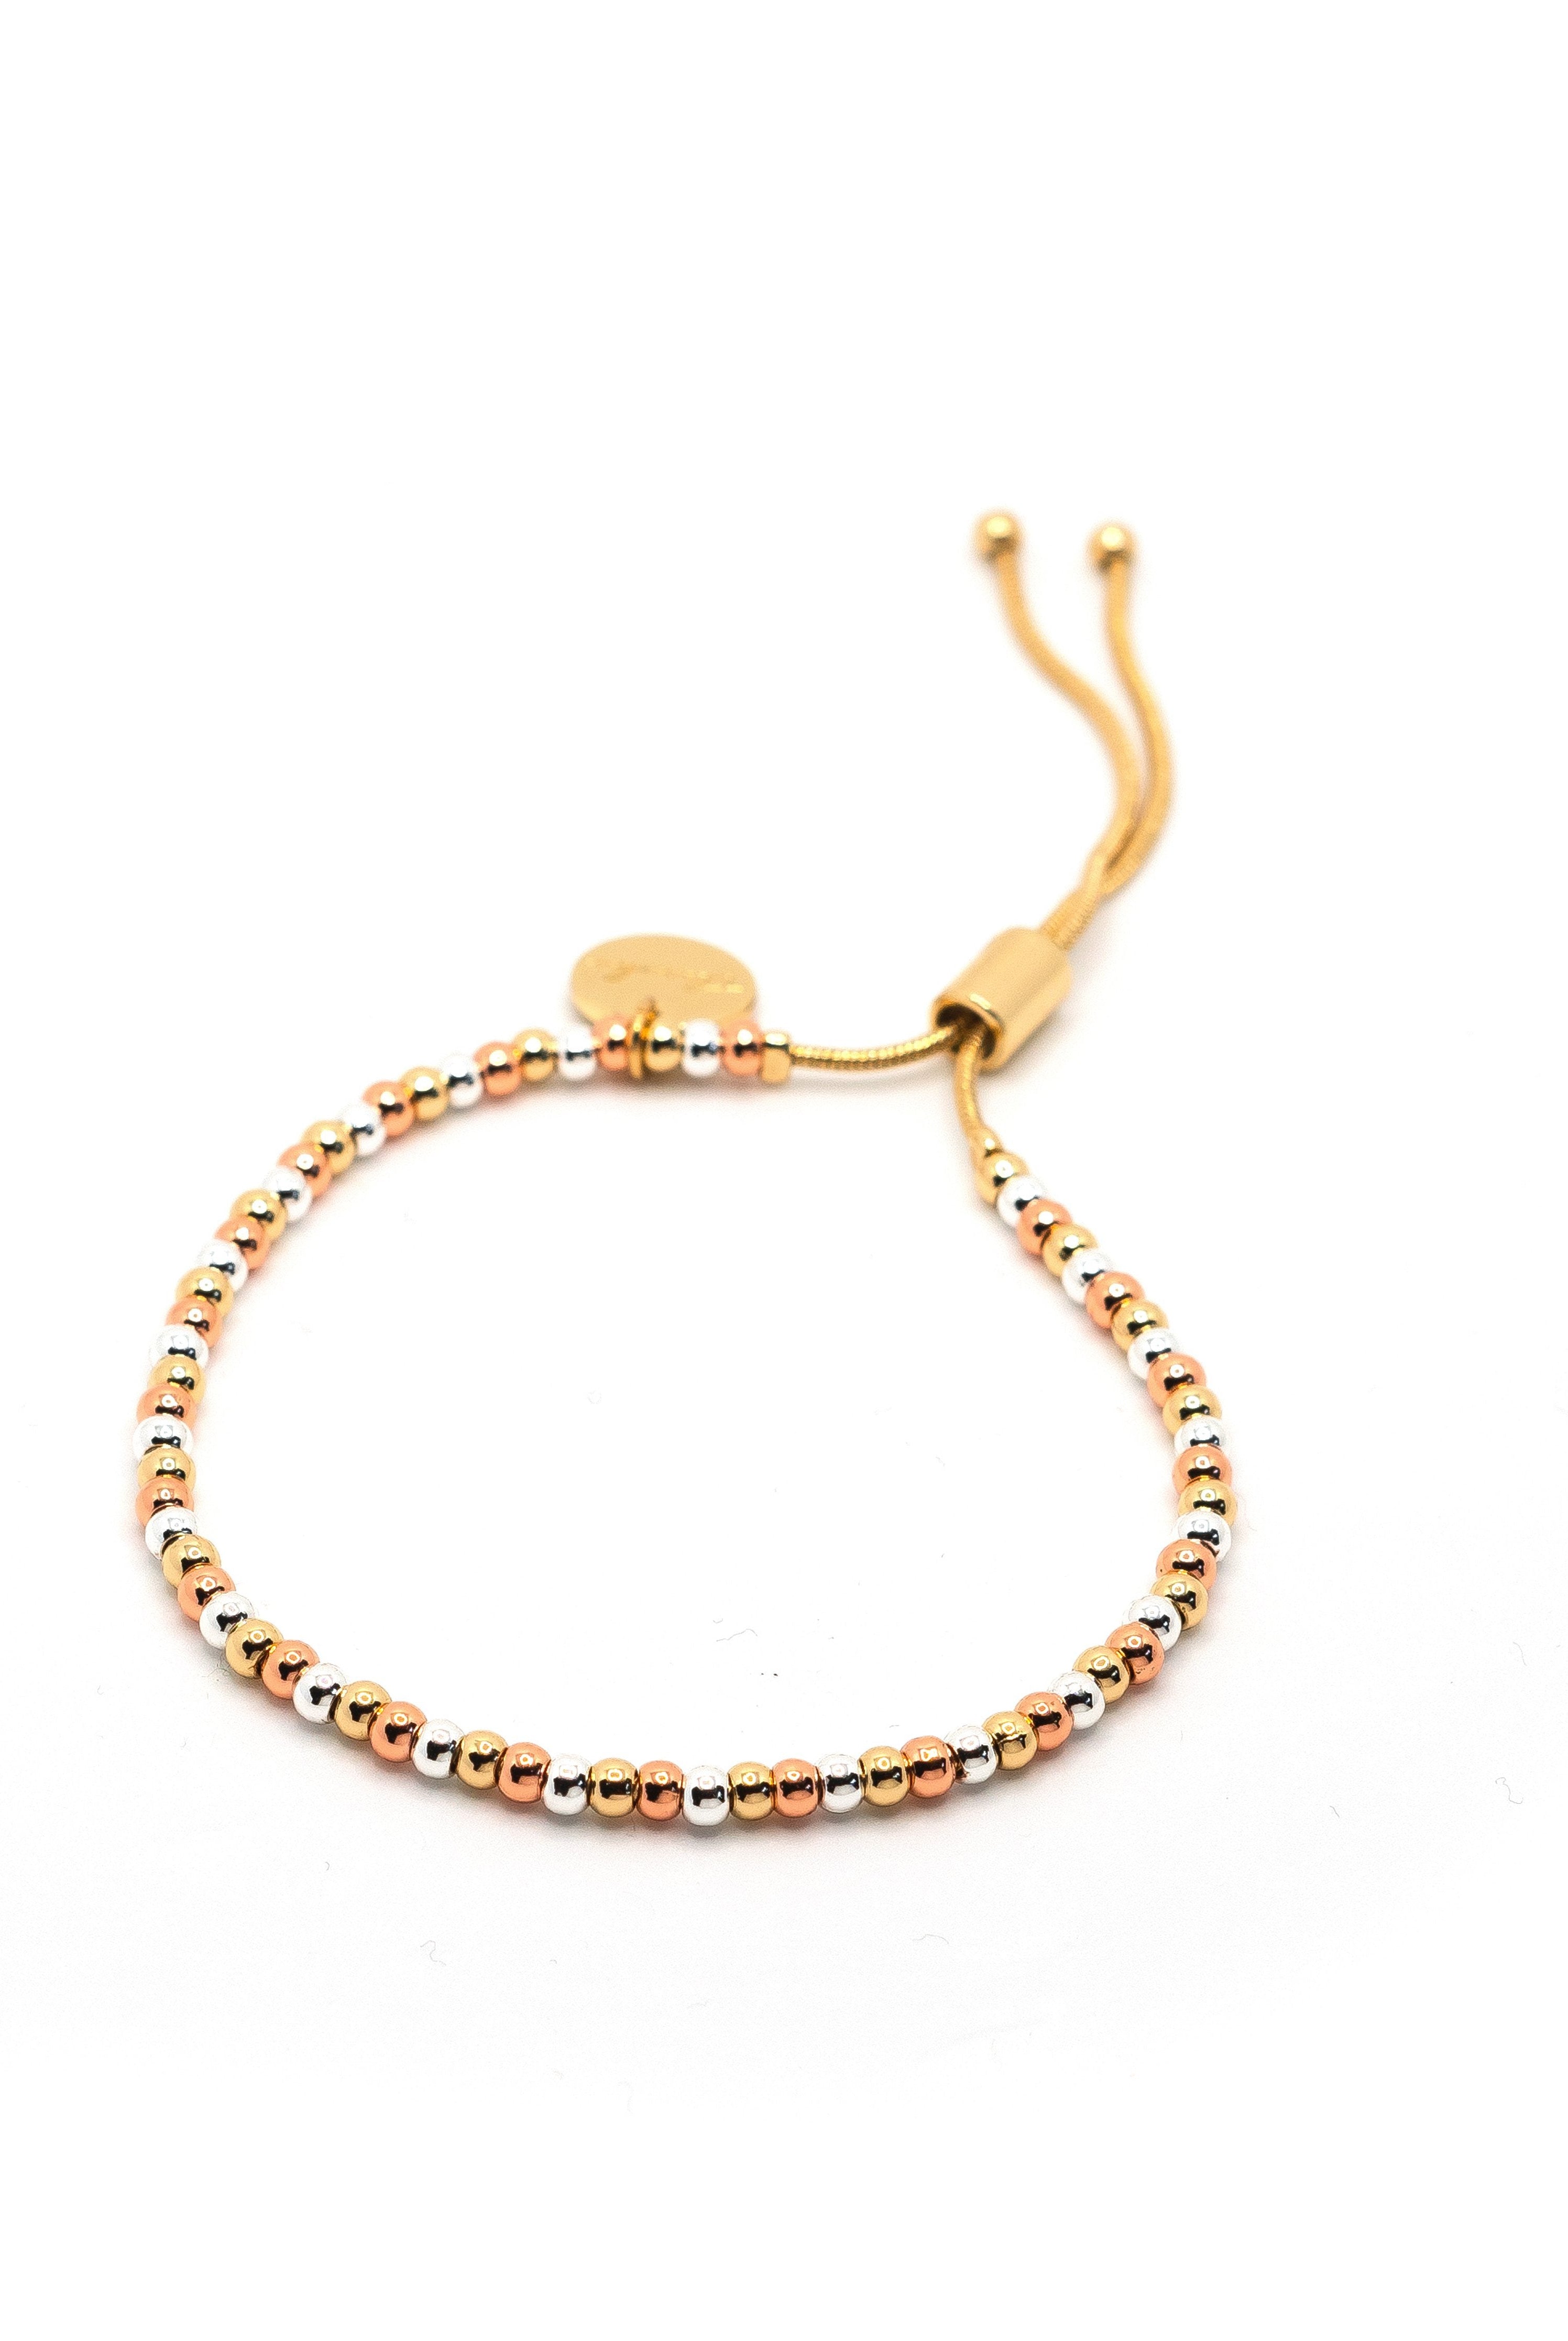 Tri Tone Adjustable Bracelet in 3mm-Bracelets-The Sis Kiss®-Urban Threadz Boutique, Women's Fashion Boutique in Saugatuck, MI